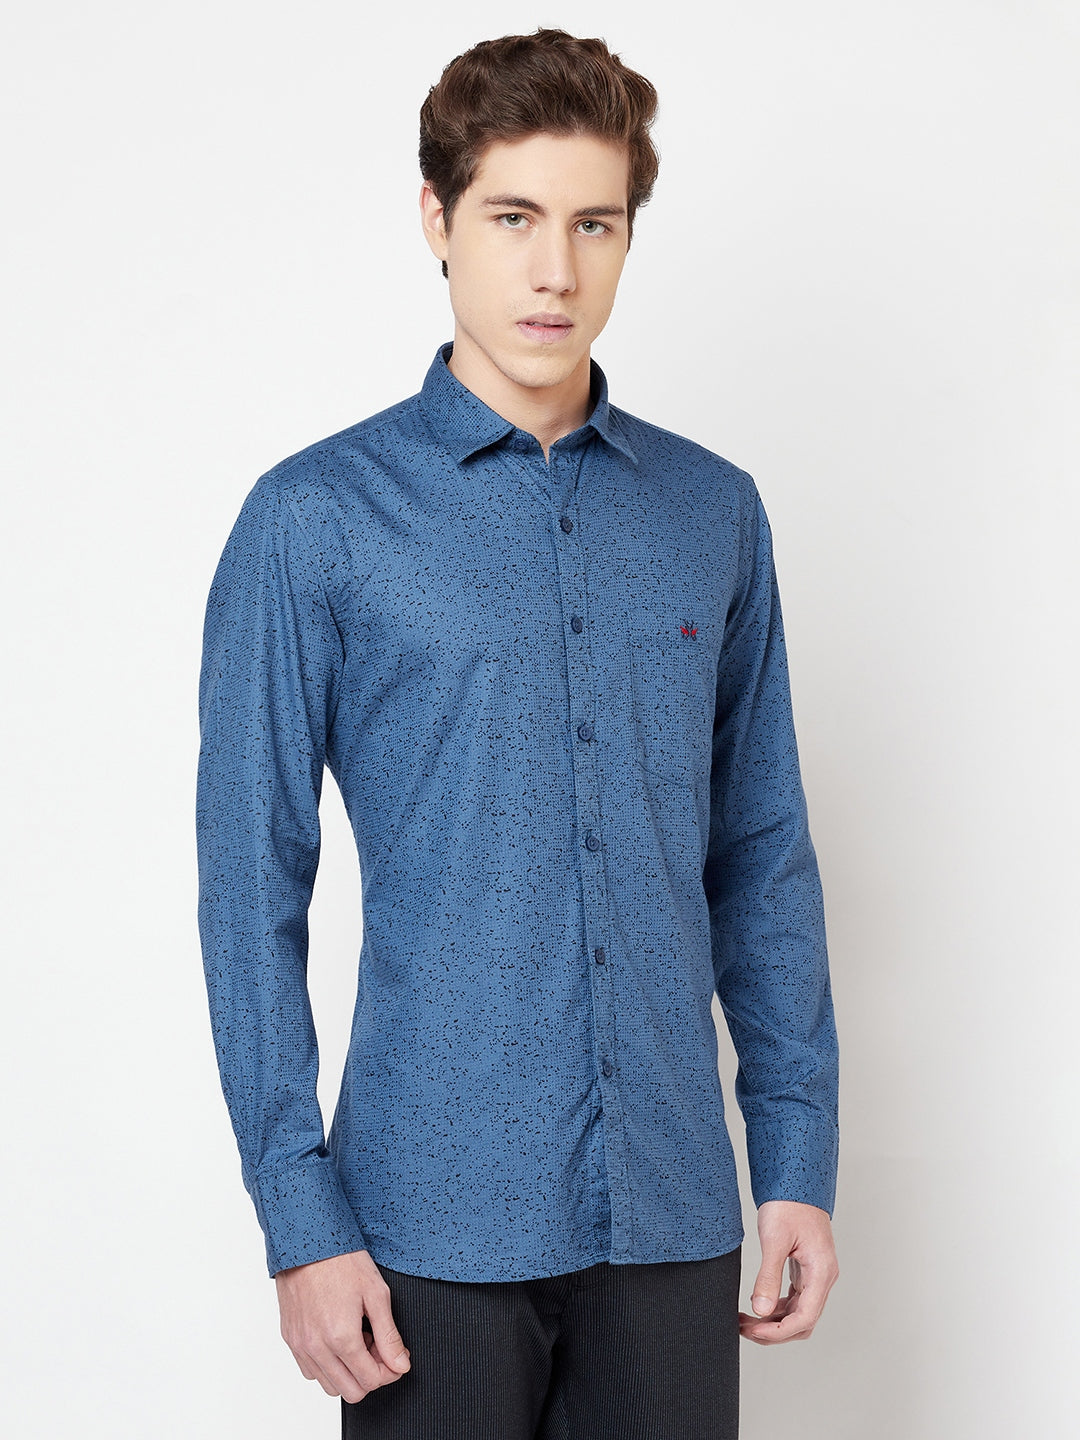 Blue Printed Shirt - Men Shirts